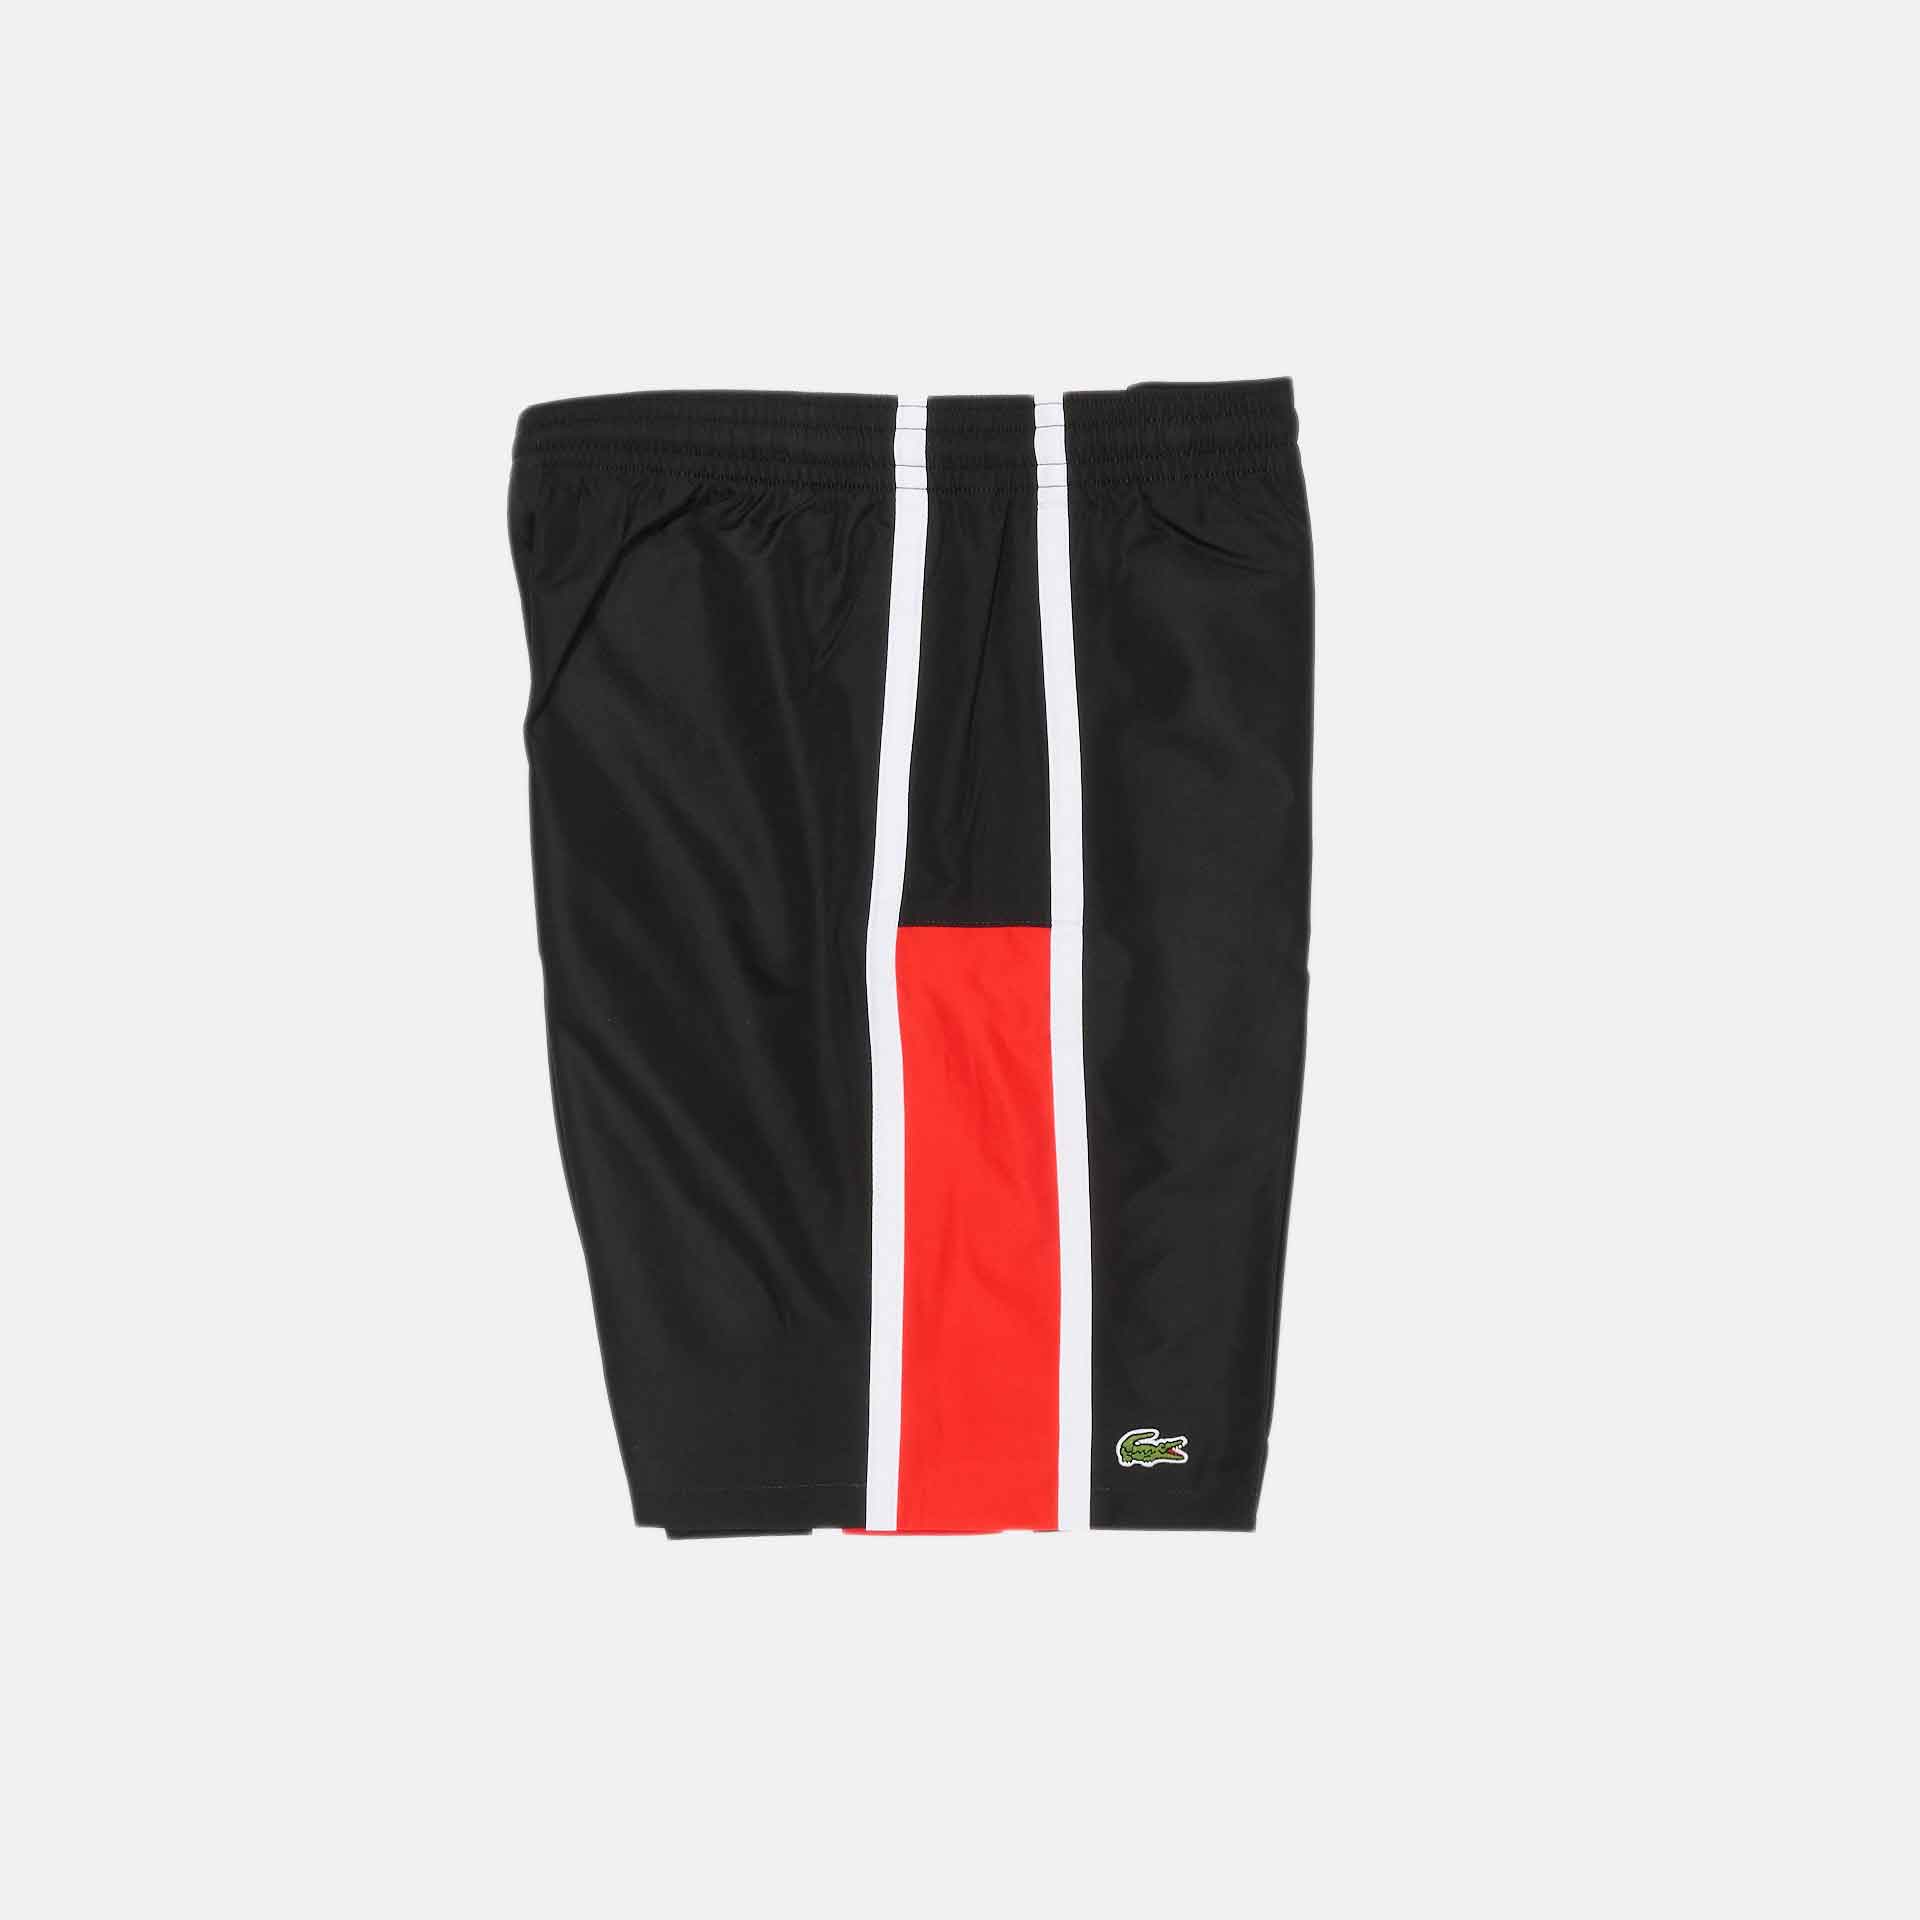 Lacoste Color Block Shorts Black/Corrida/White